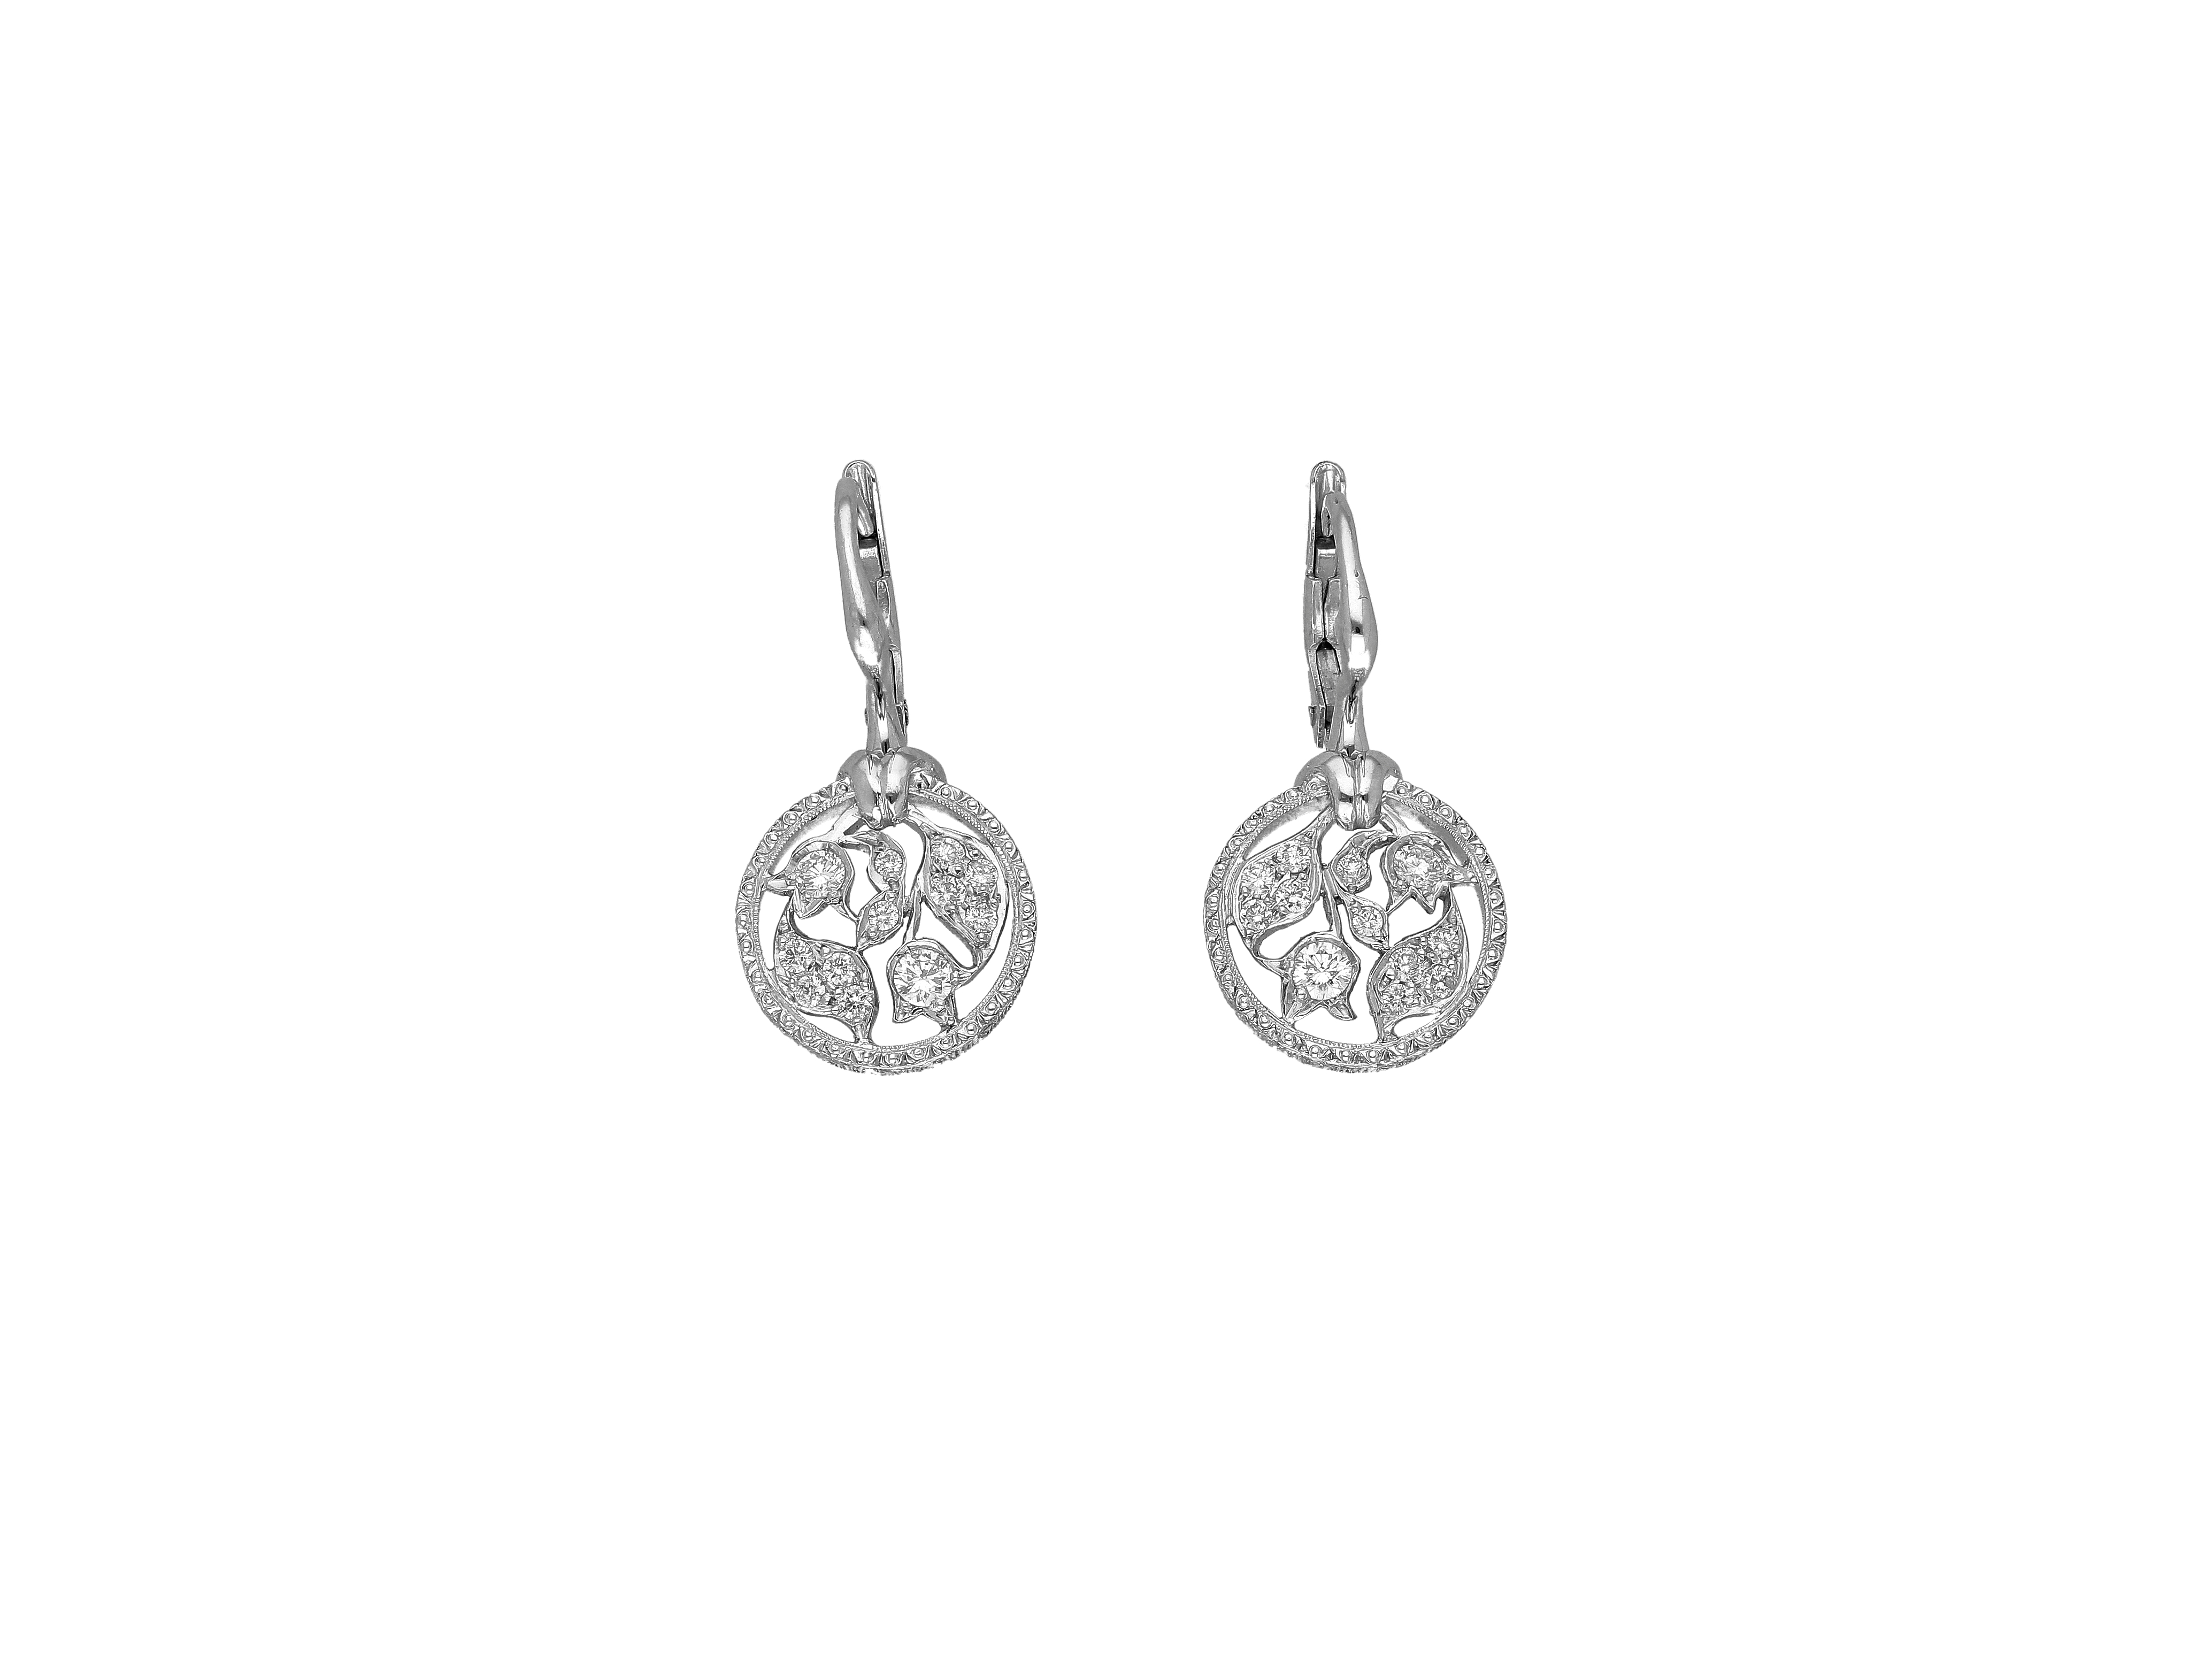 pair of Florentine-inspired diamond earrings